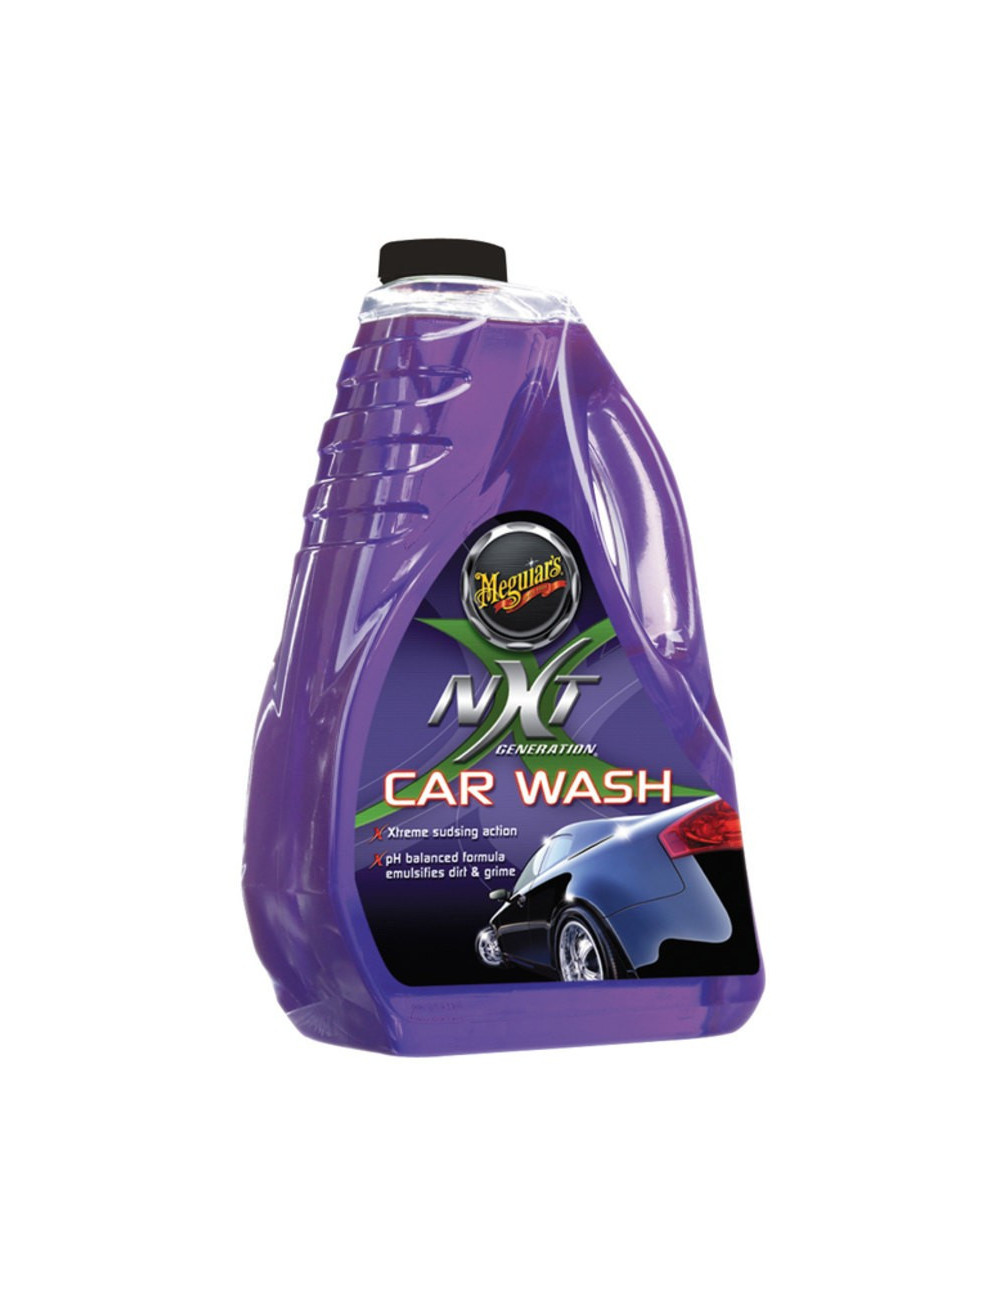 MEGUIARS Shampoo Meguiars NXT Generation - Car Wash 1890ml